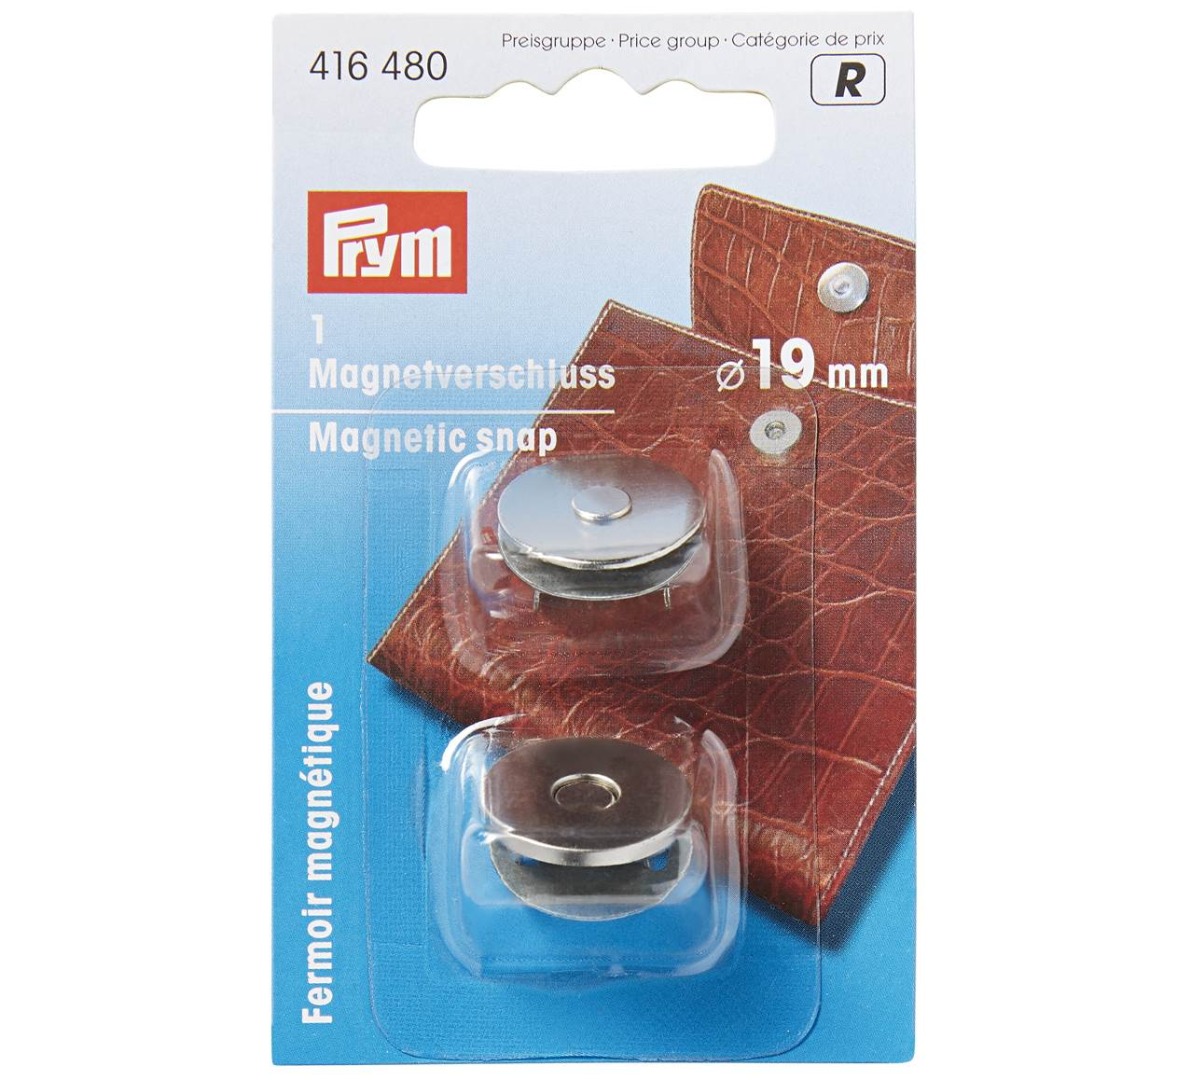 1Pck Magnet-Verschlüsse 19 mm Prym - Inhalt: 1 Stück silberfarbig